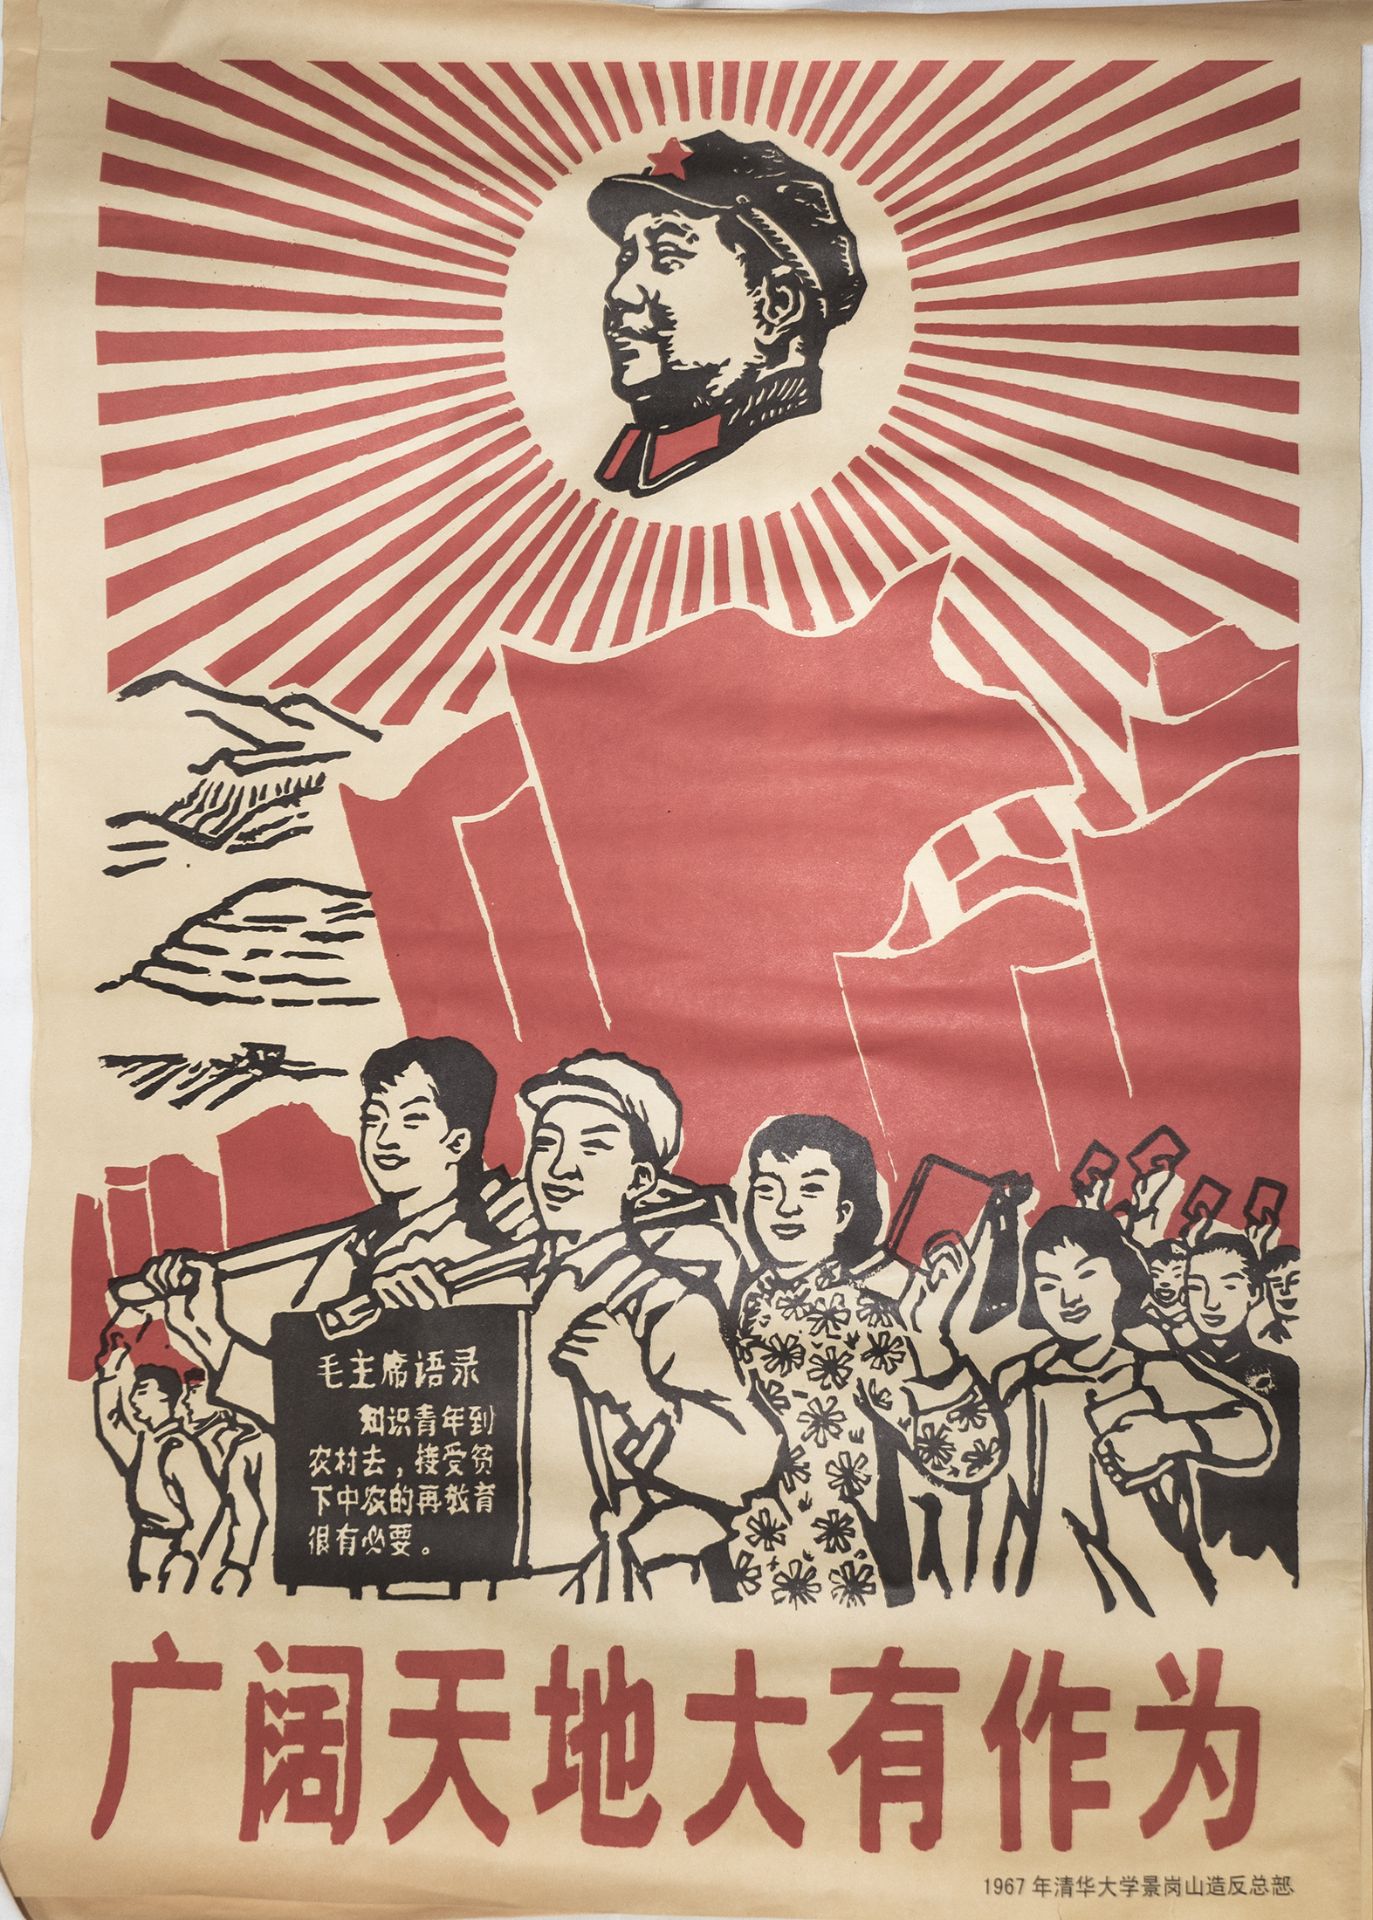 China 1967/68, Lot Mao - Plakate, Propaganda - Plakate auf gelben dünnen Papier, farbig bedruckt, - Image 2 of 3